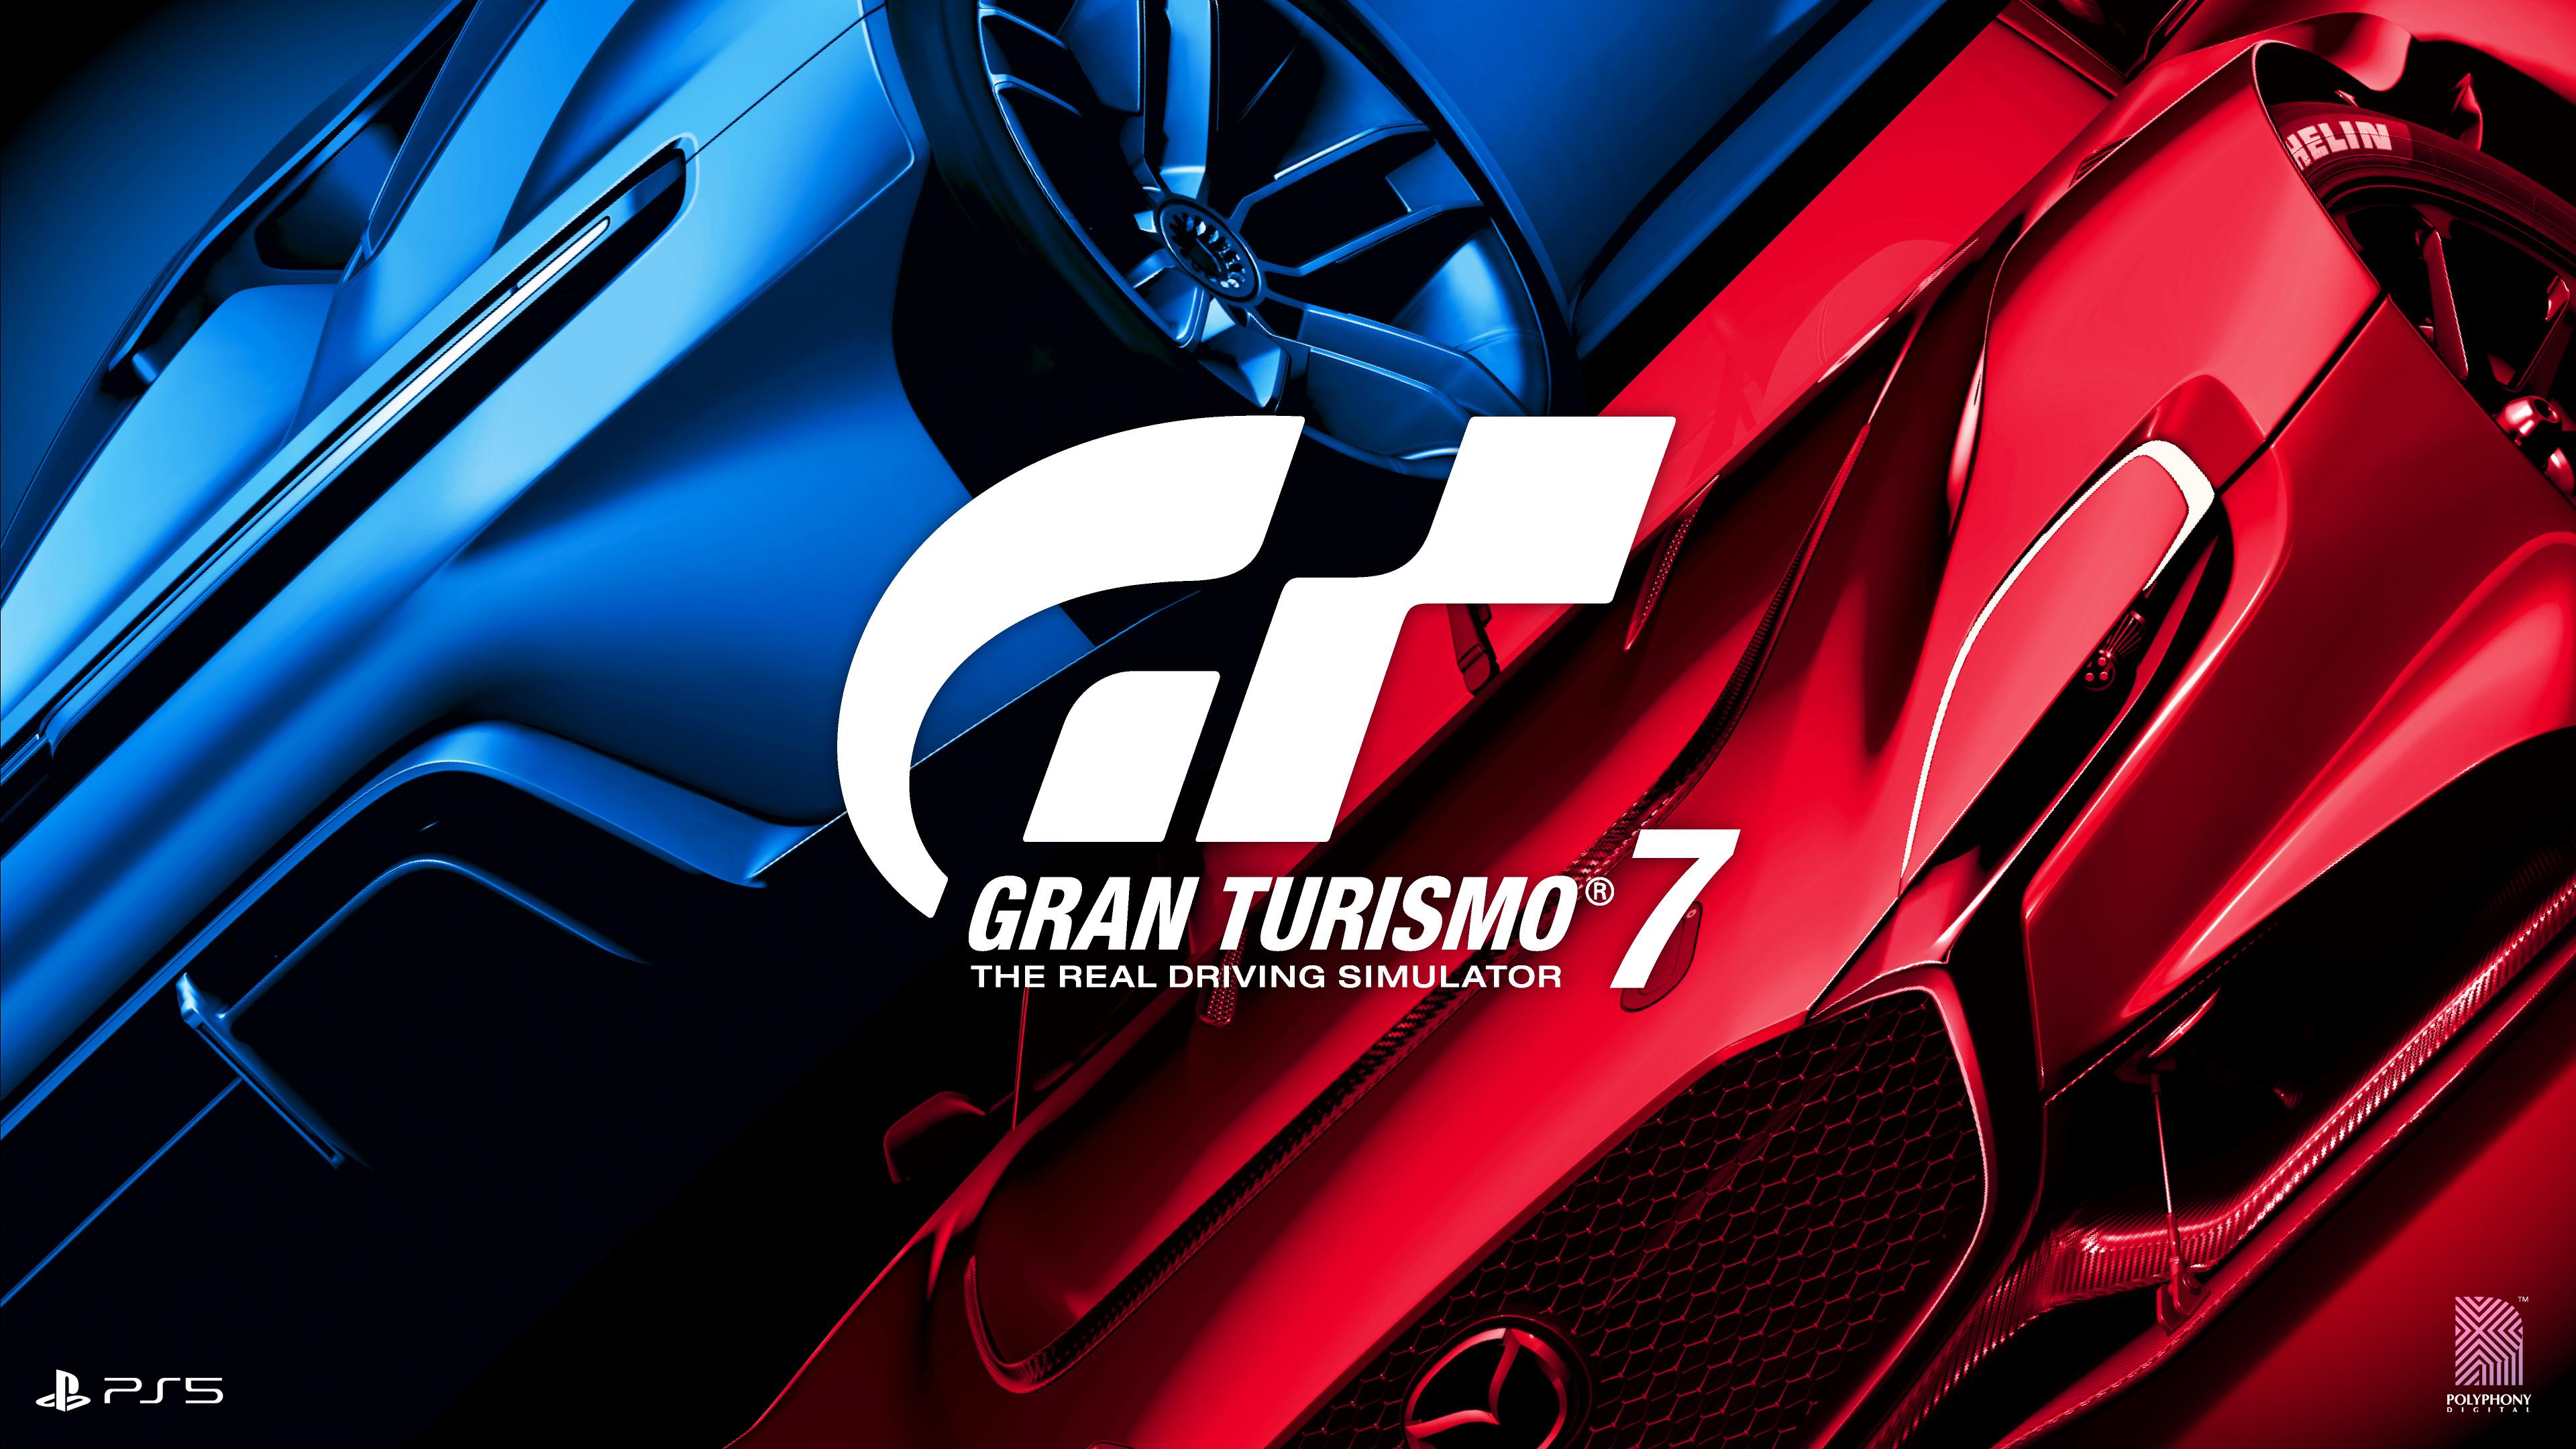 GRAN TURISMO 7 PS5 Cover. Ultra 4K Wallpaper. Enjoy